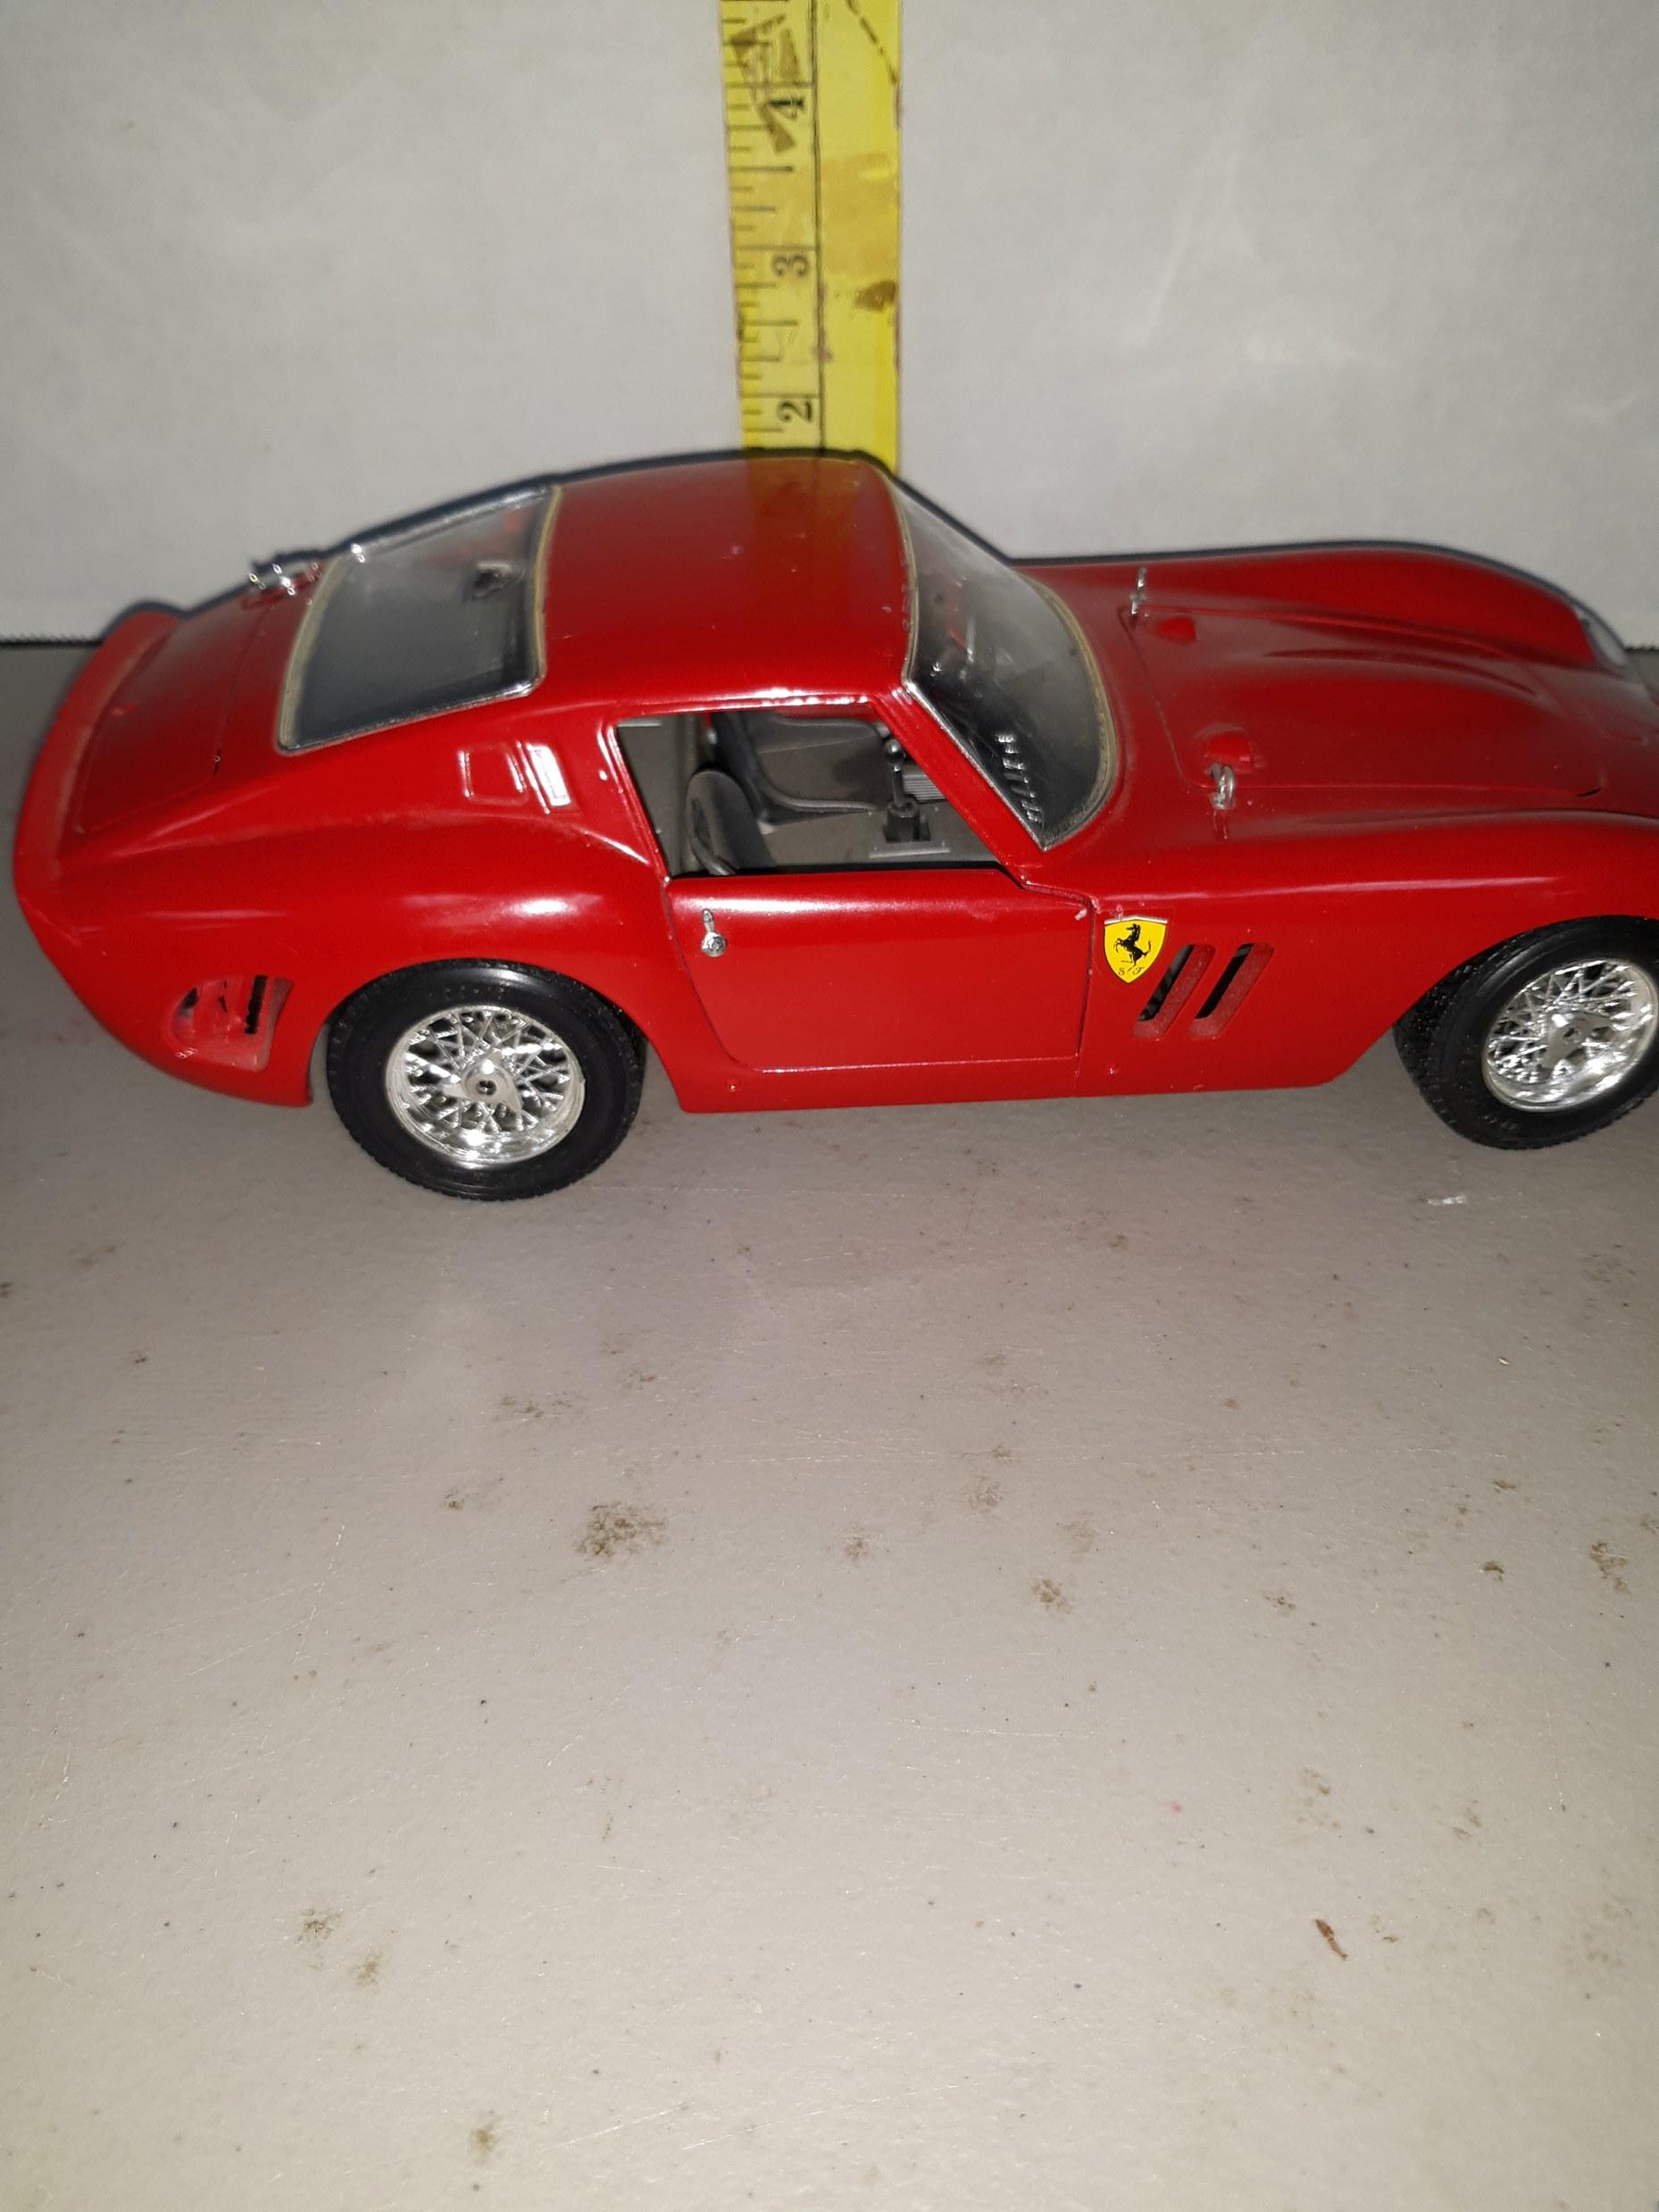 Ferrari Car, Made in Italy